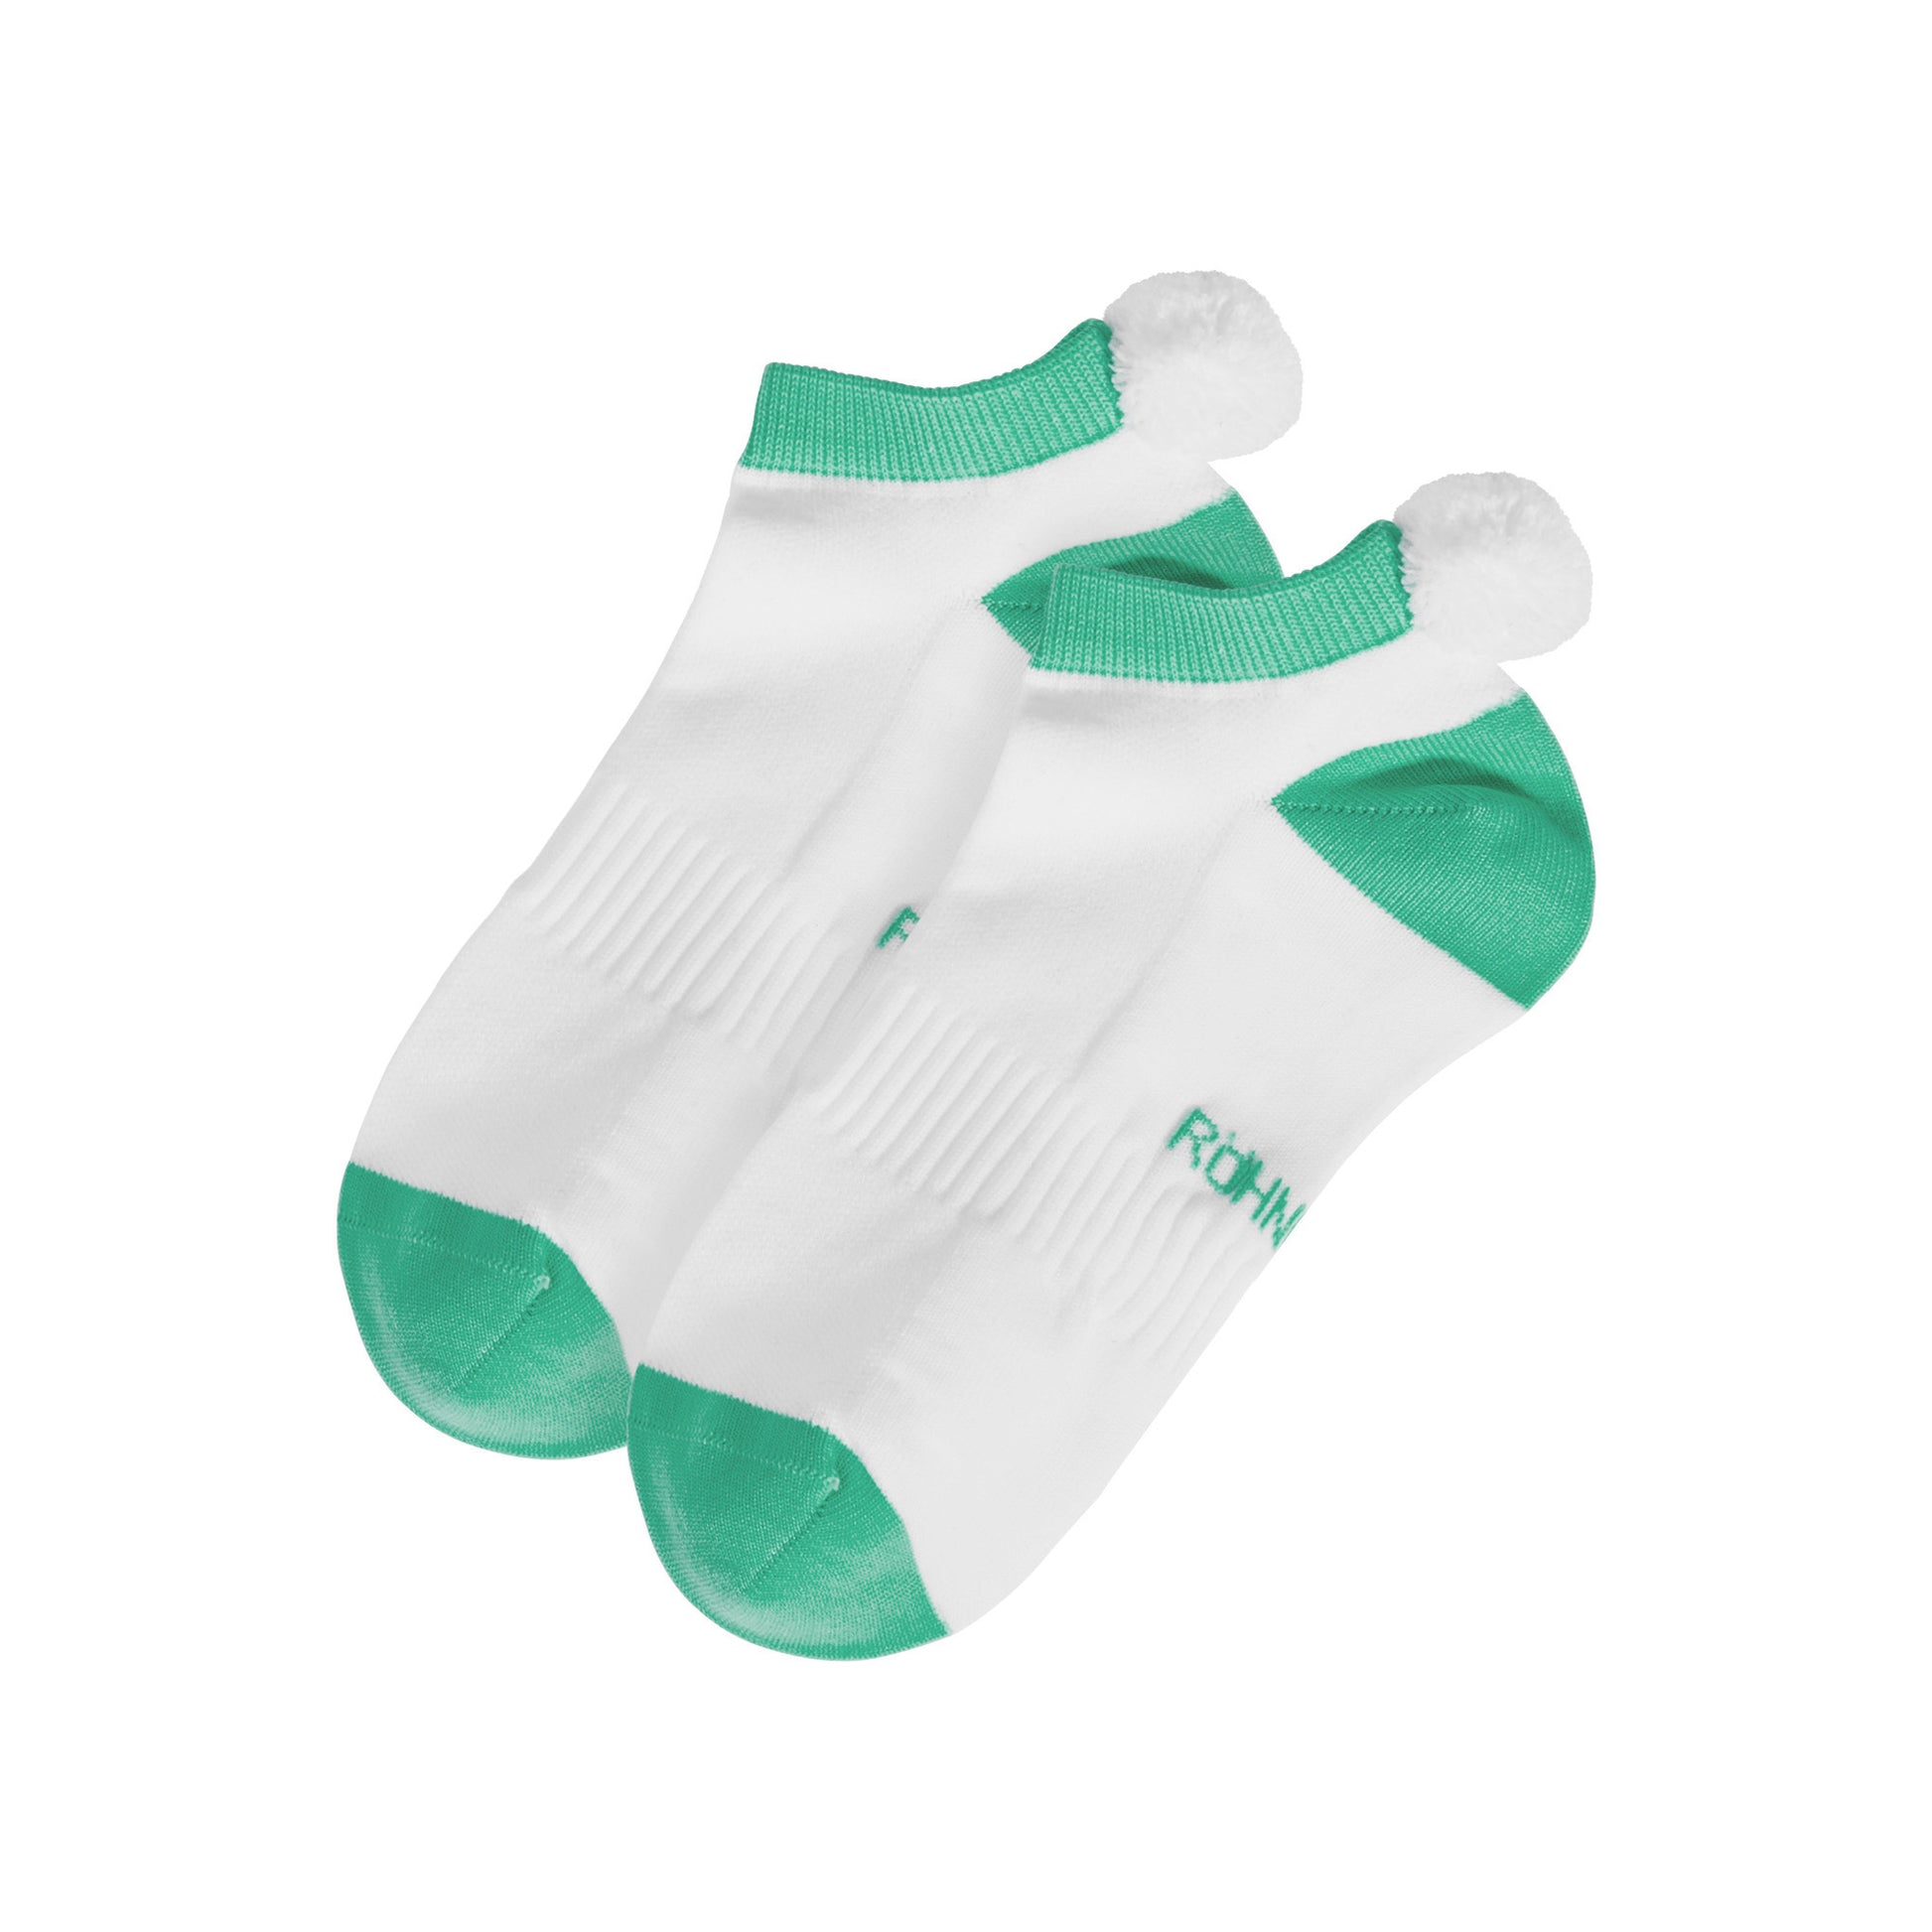 Rohnisch Ladies 2 Pair Pack of PomPom Socks in Ice Green